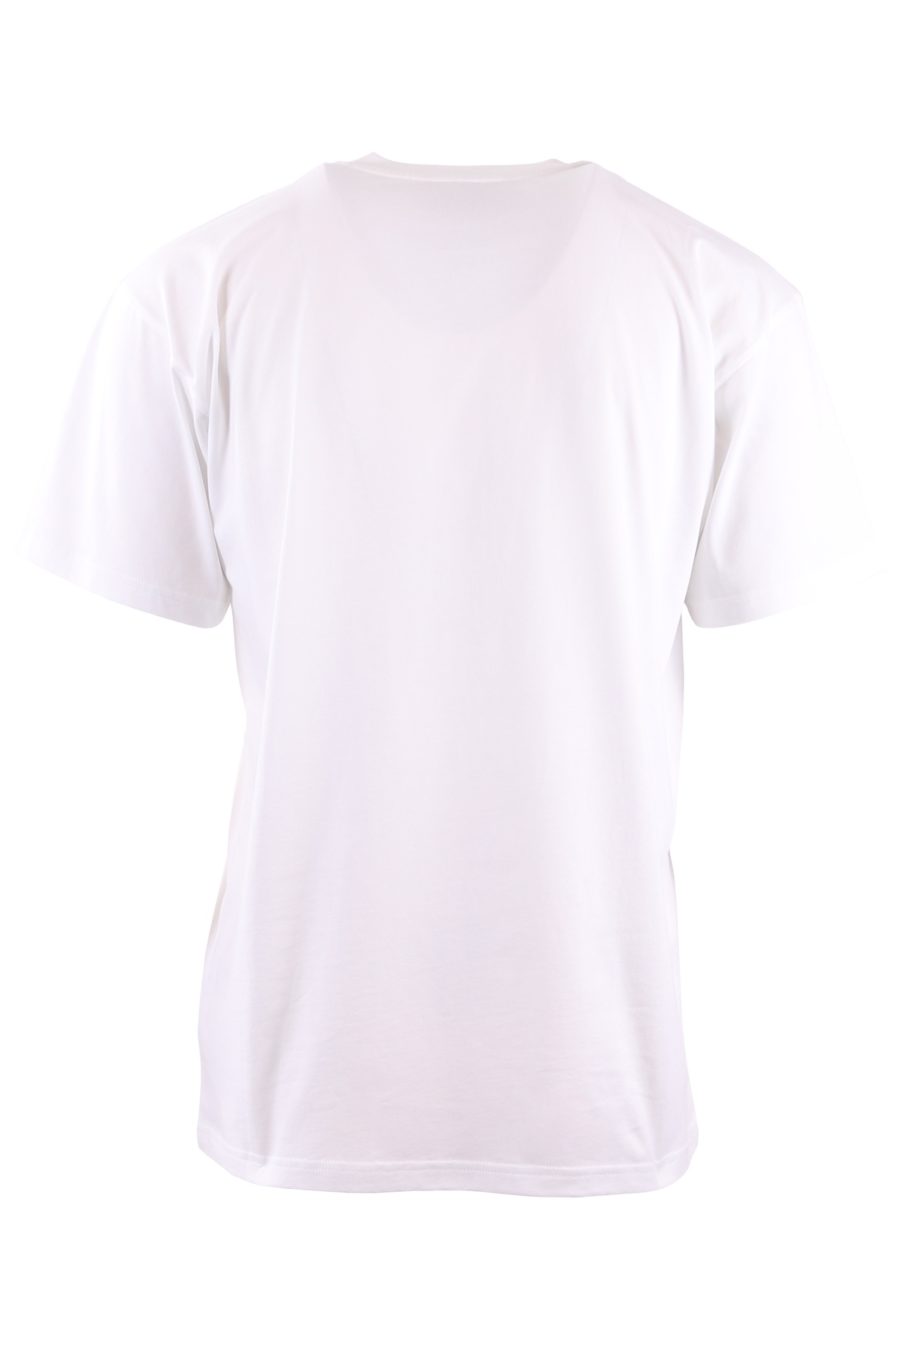 Moschino Couture oversize white T-shirt with big bear - 6c7718be4979da96f15fad71e14a796f46c6ec47